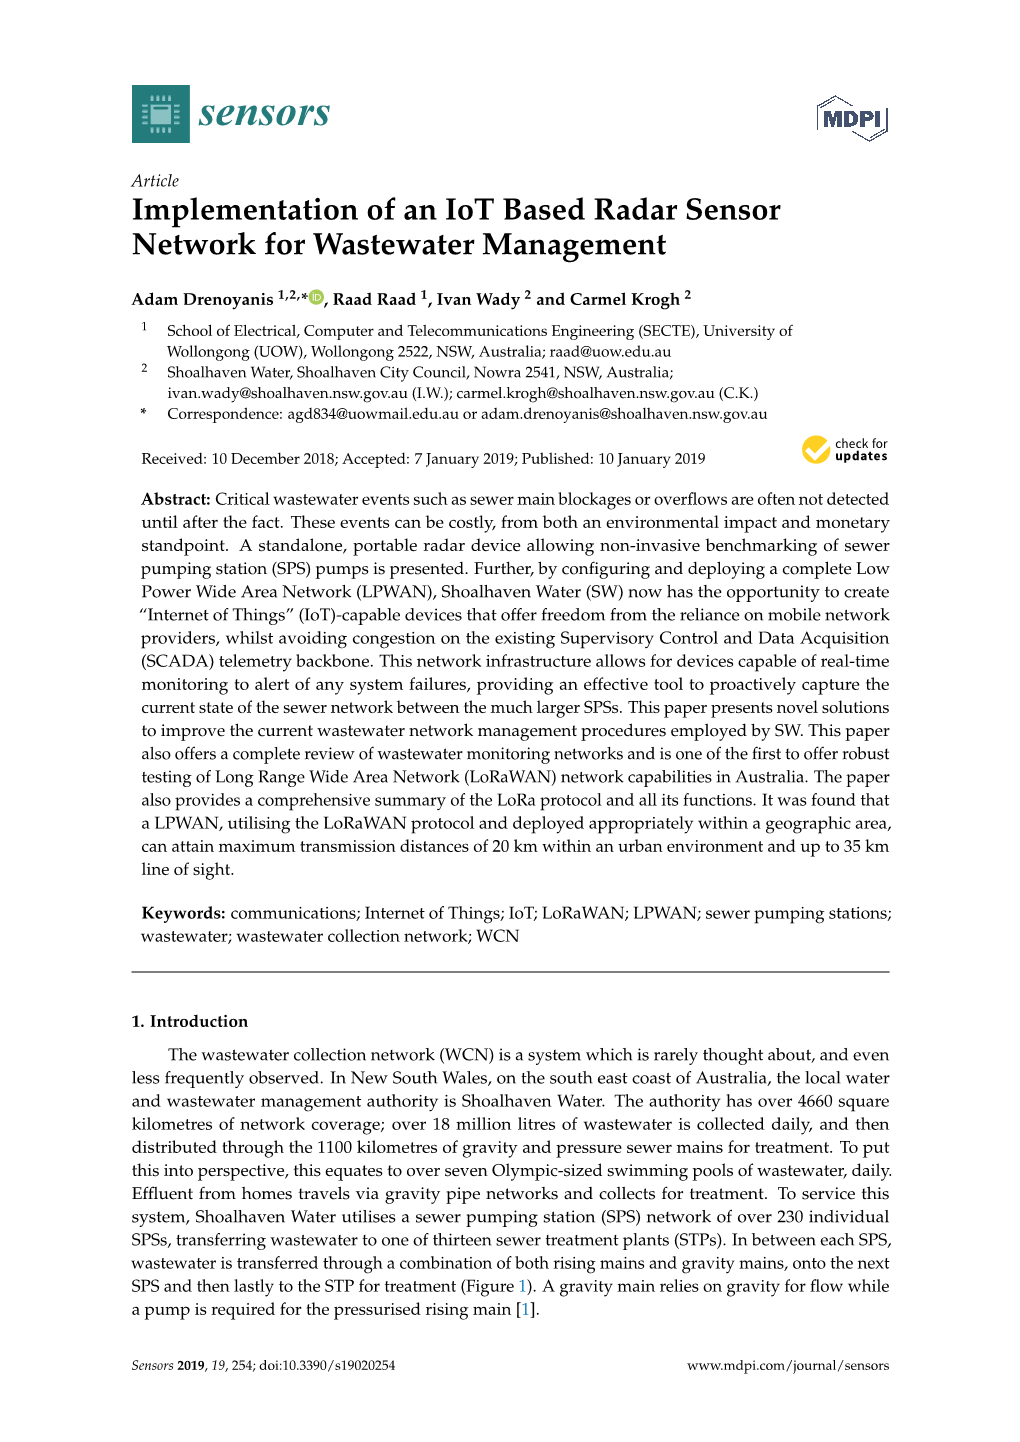 Implementation of an Iot Based Radar Sensor Network for Wastewater Management